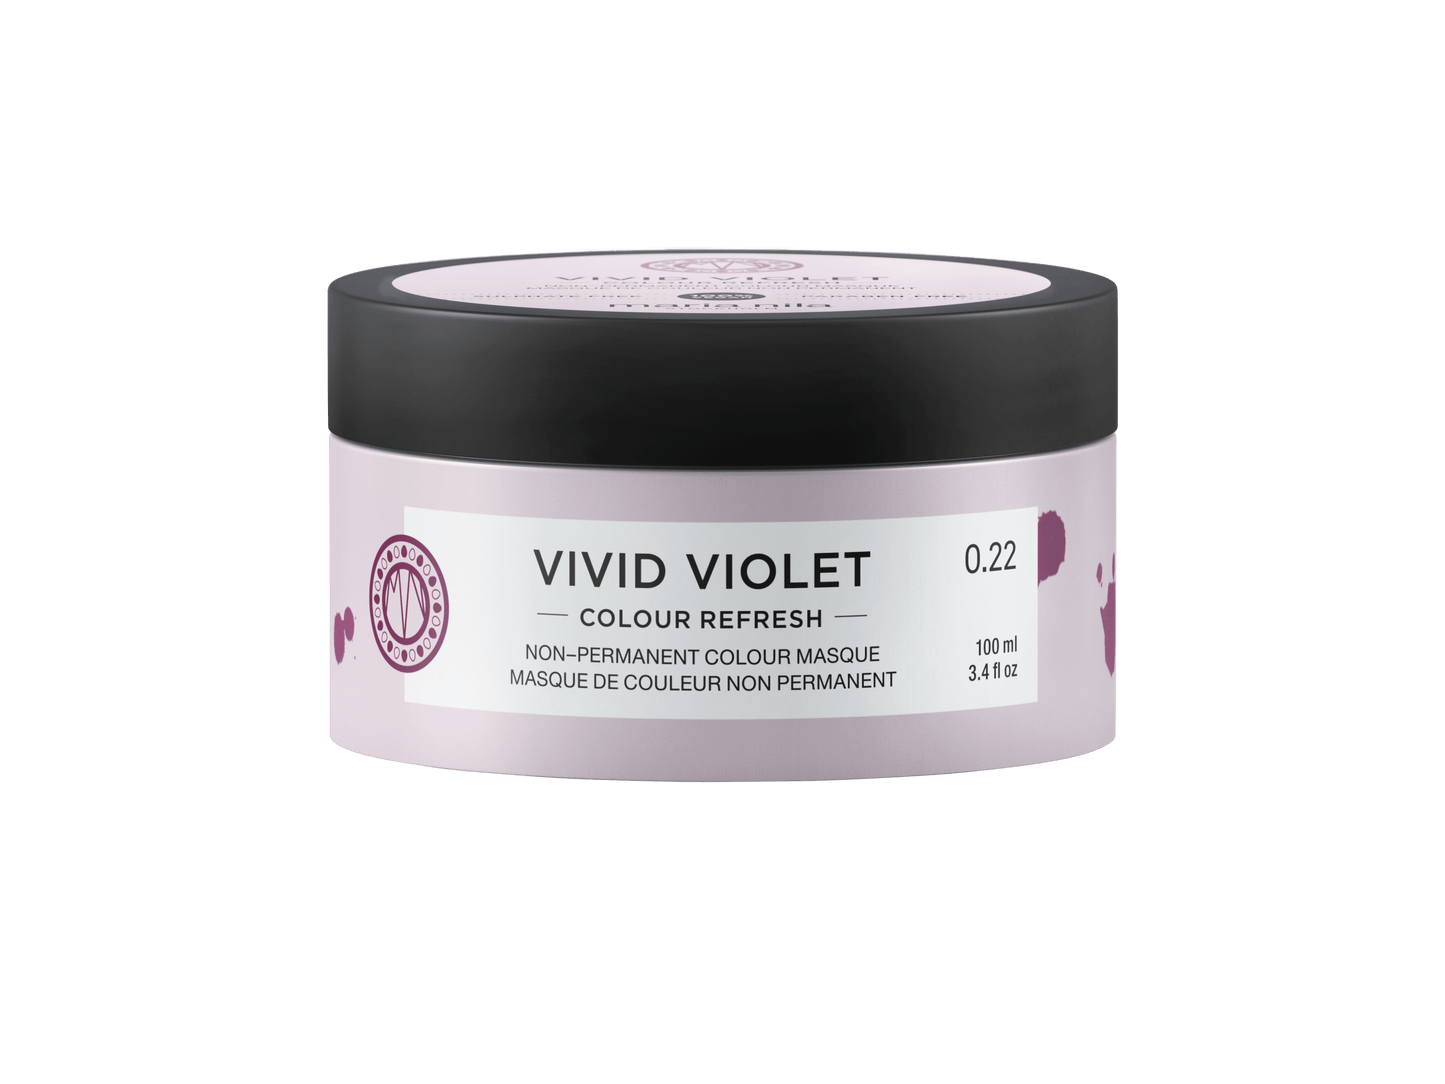 Colour Refresh Vivid Violet - The Coloroom 